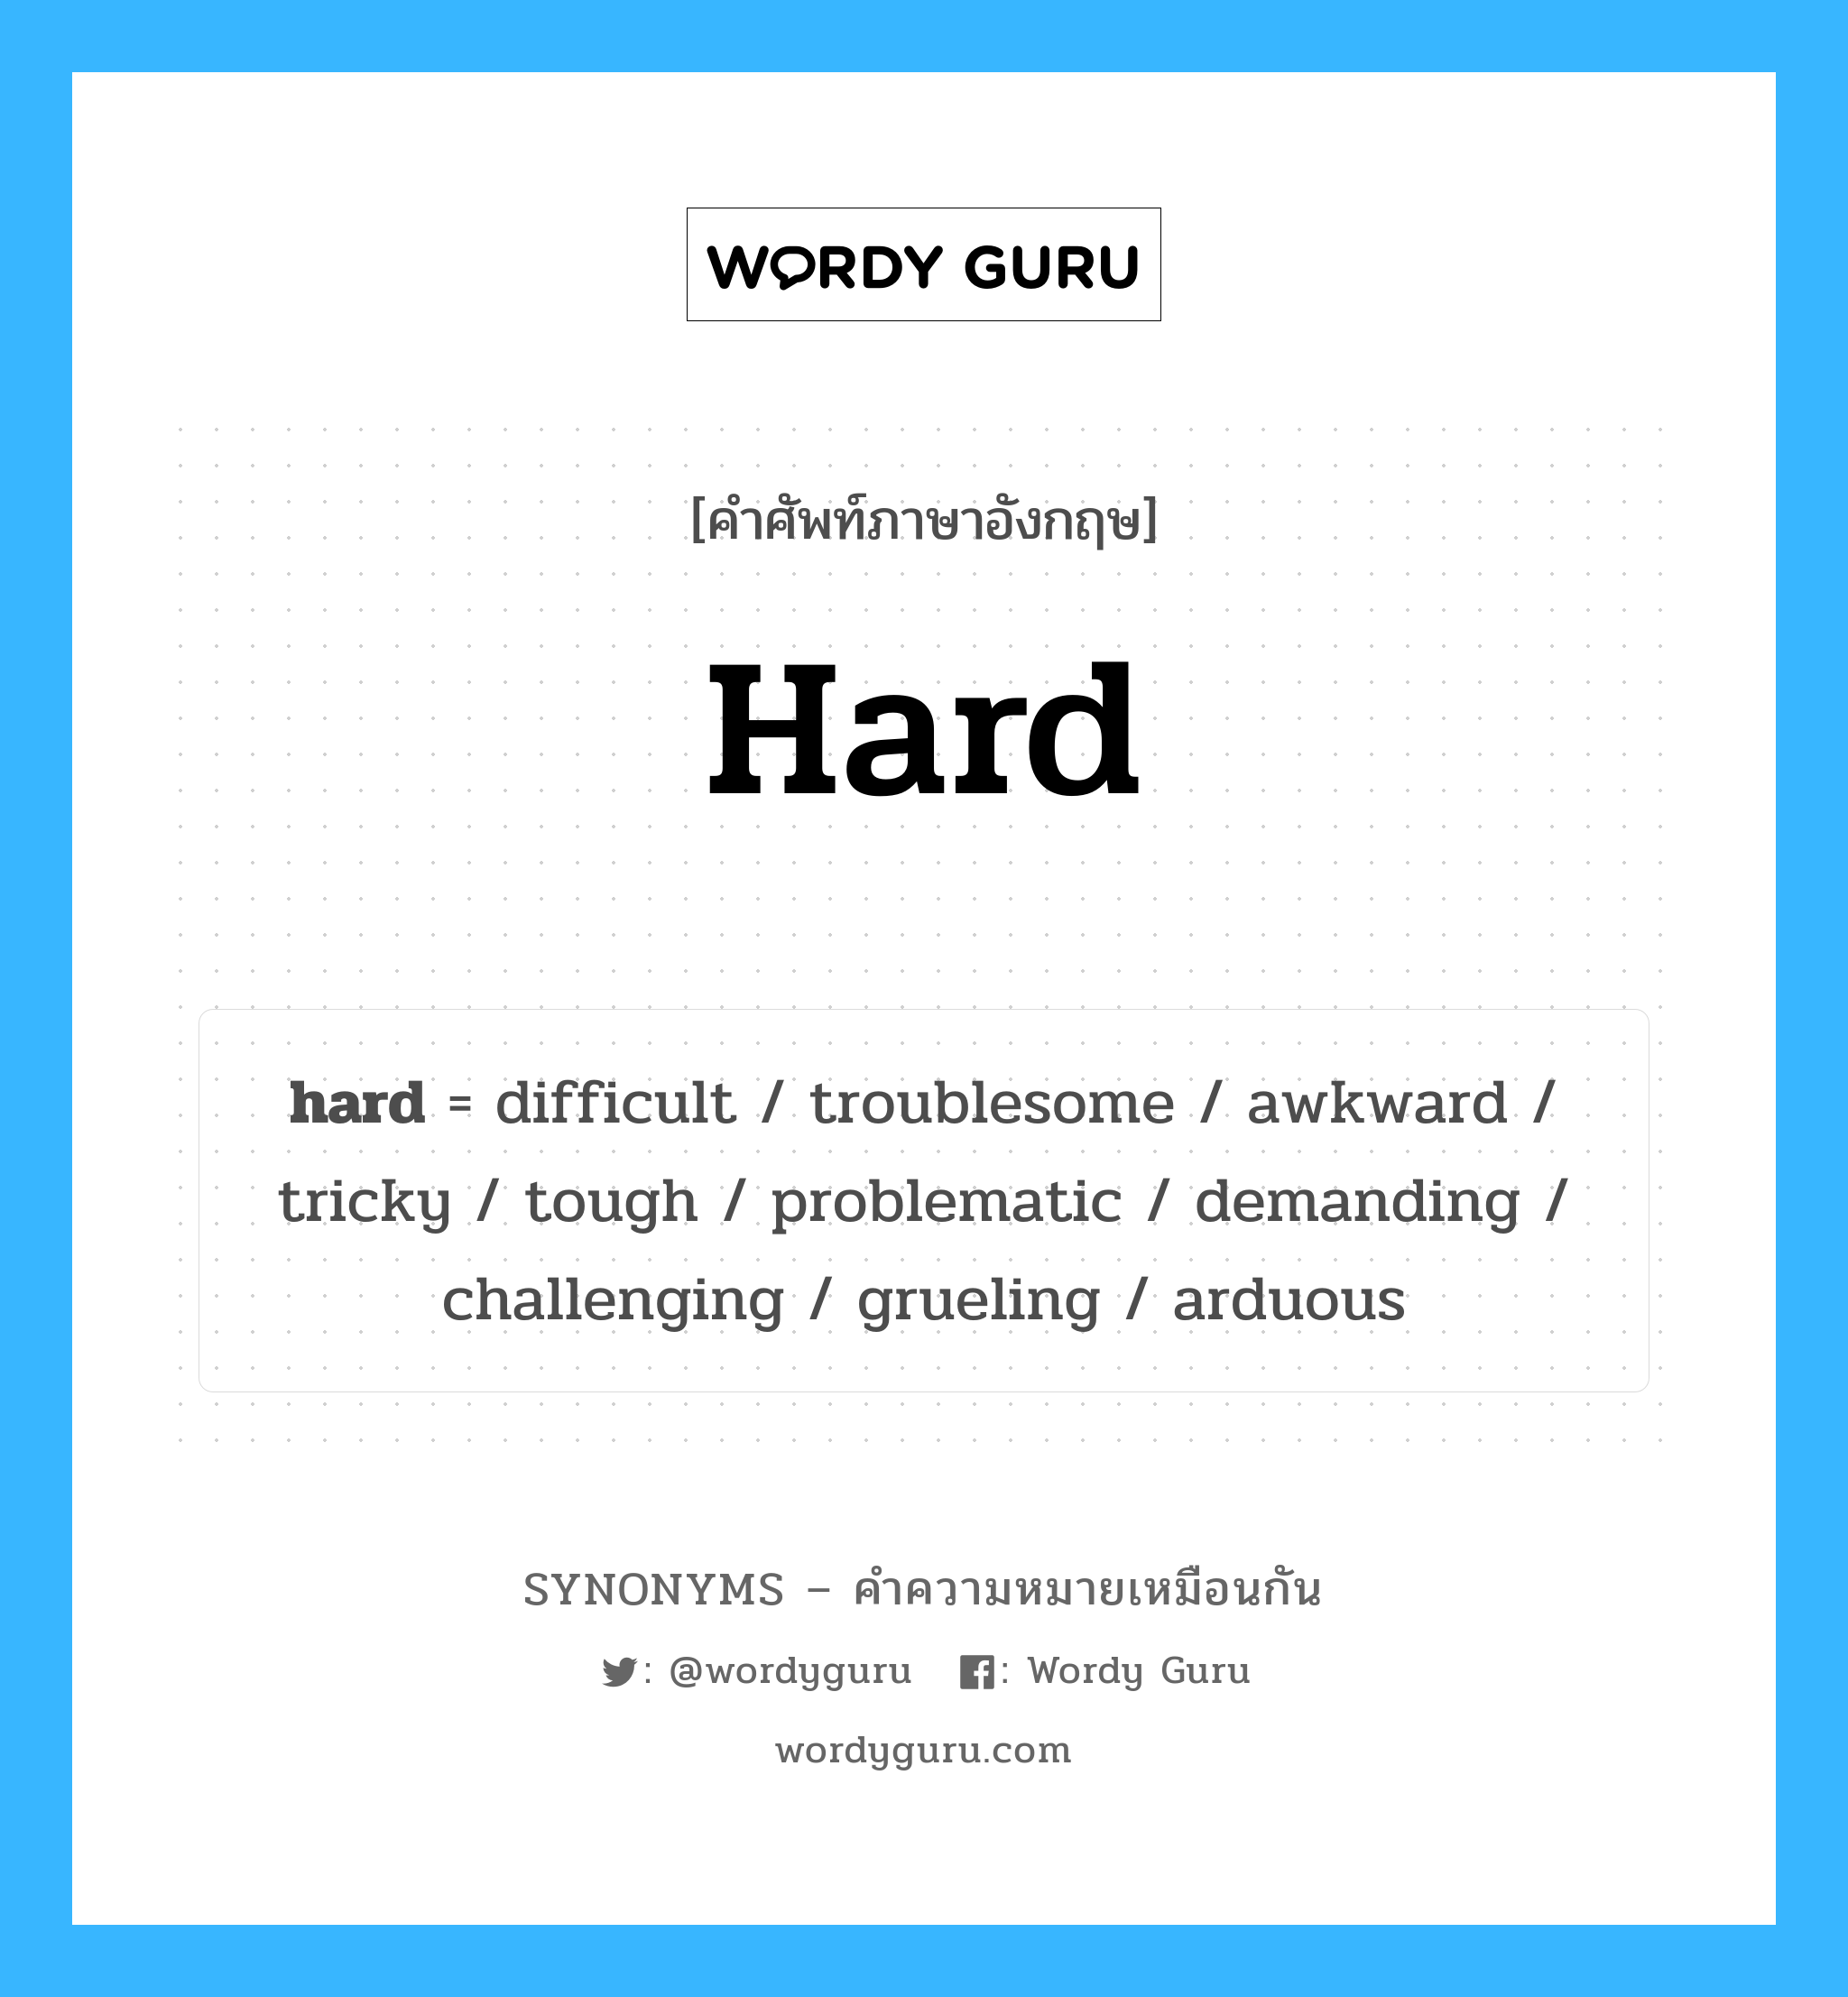 grueling เป็นหนึ่งใน hard และมีคำอื่น ๆ อีกดังนี้, คำศัพท์ภาษาอังกฤษ grueling ความหมายคล้ายกันกับ hard แปลว่า ทรหด หมวด hard